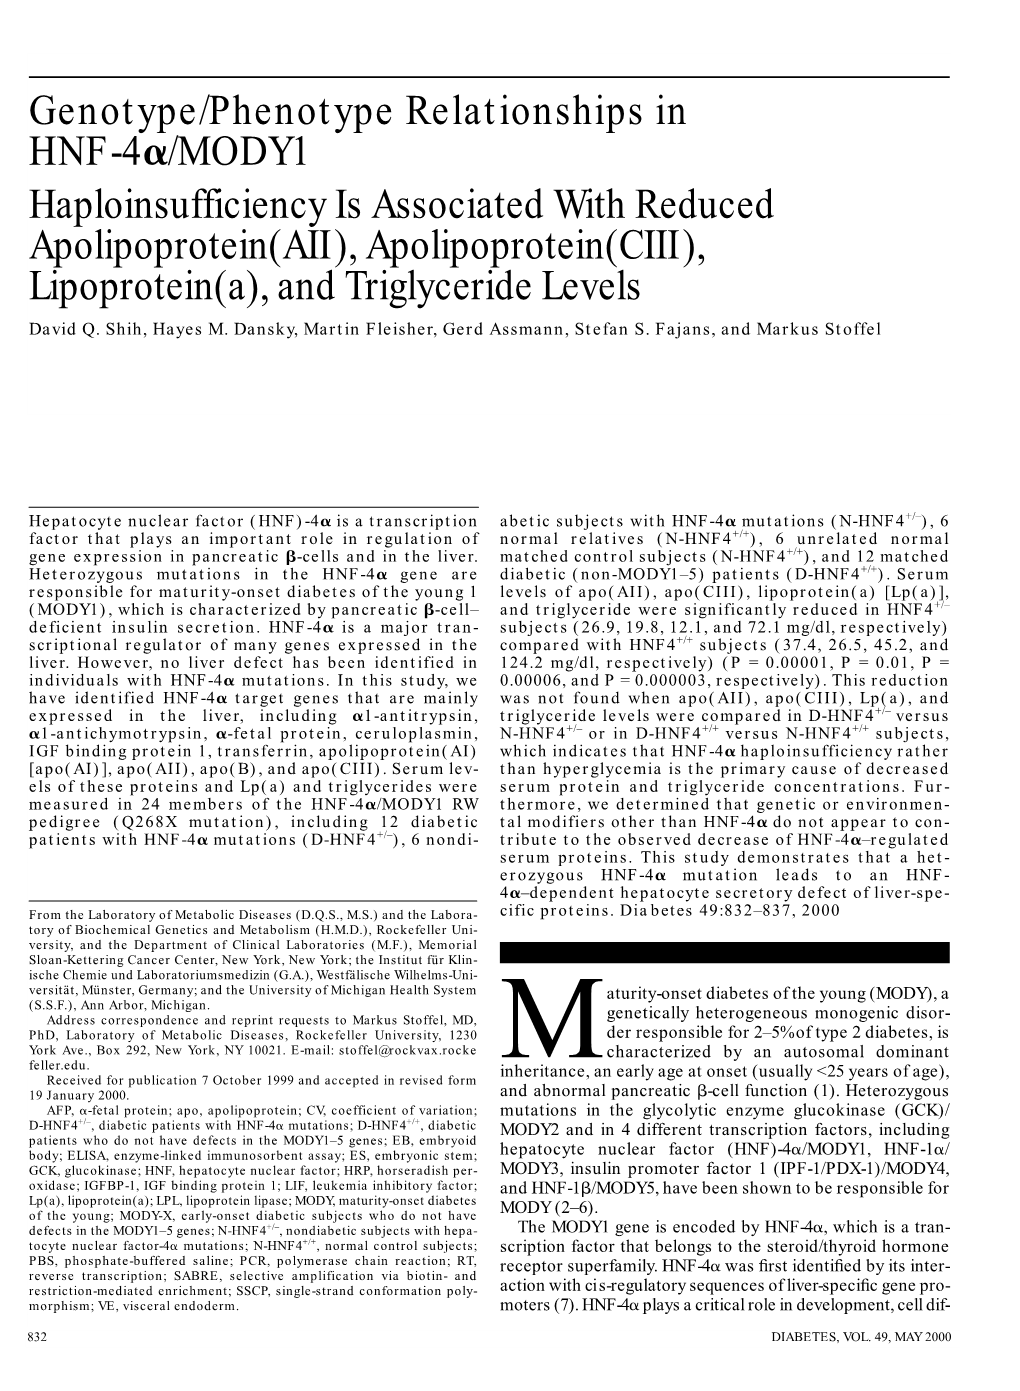 Genotype/Phenotype Relationships in HNF-4 /MODY1 Haploinsufficiency